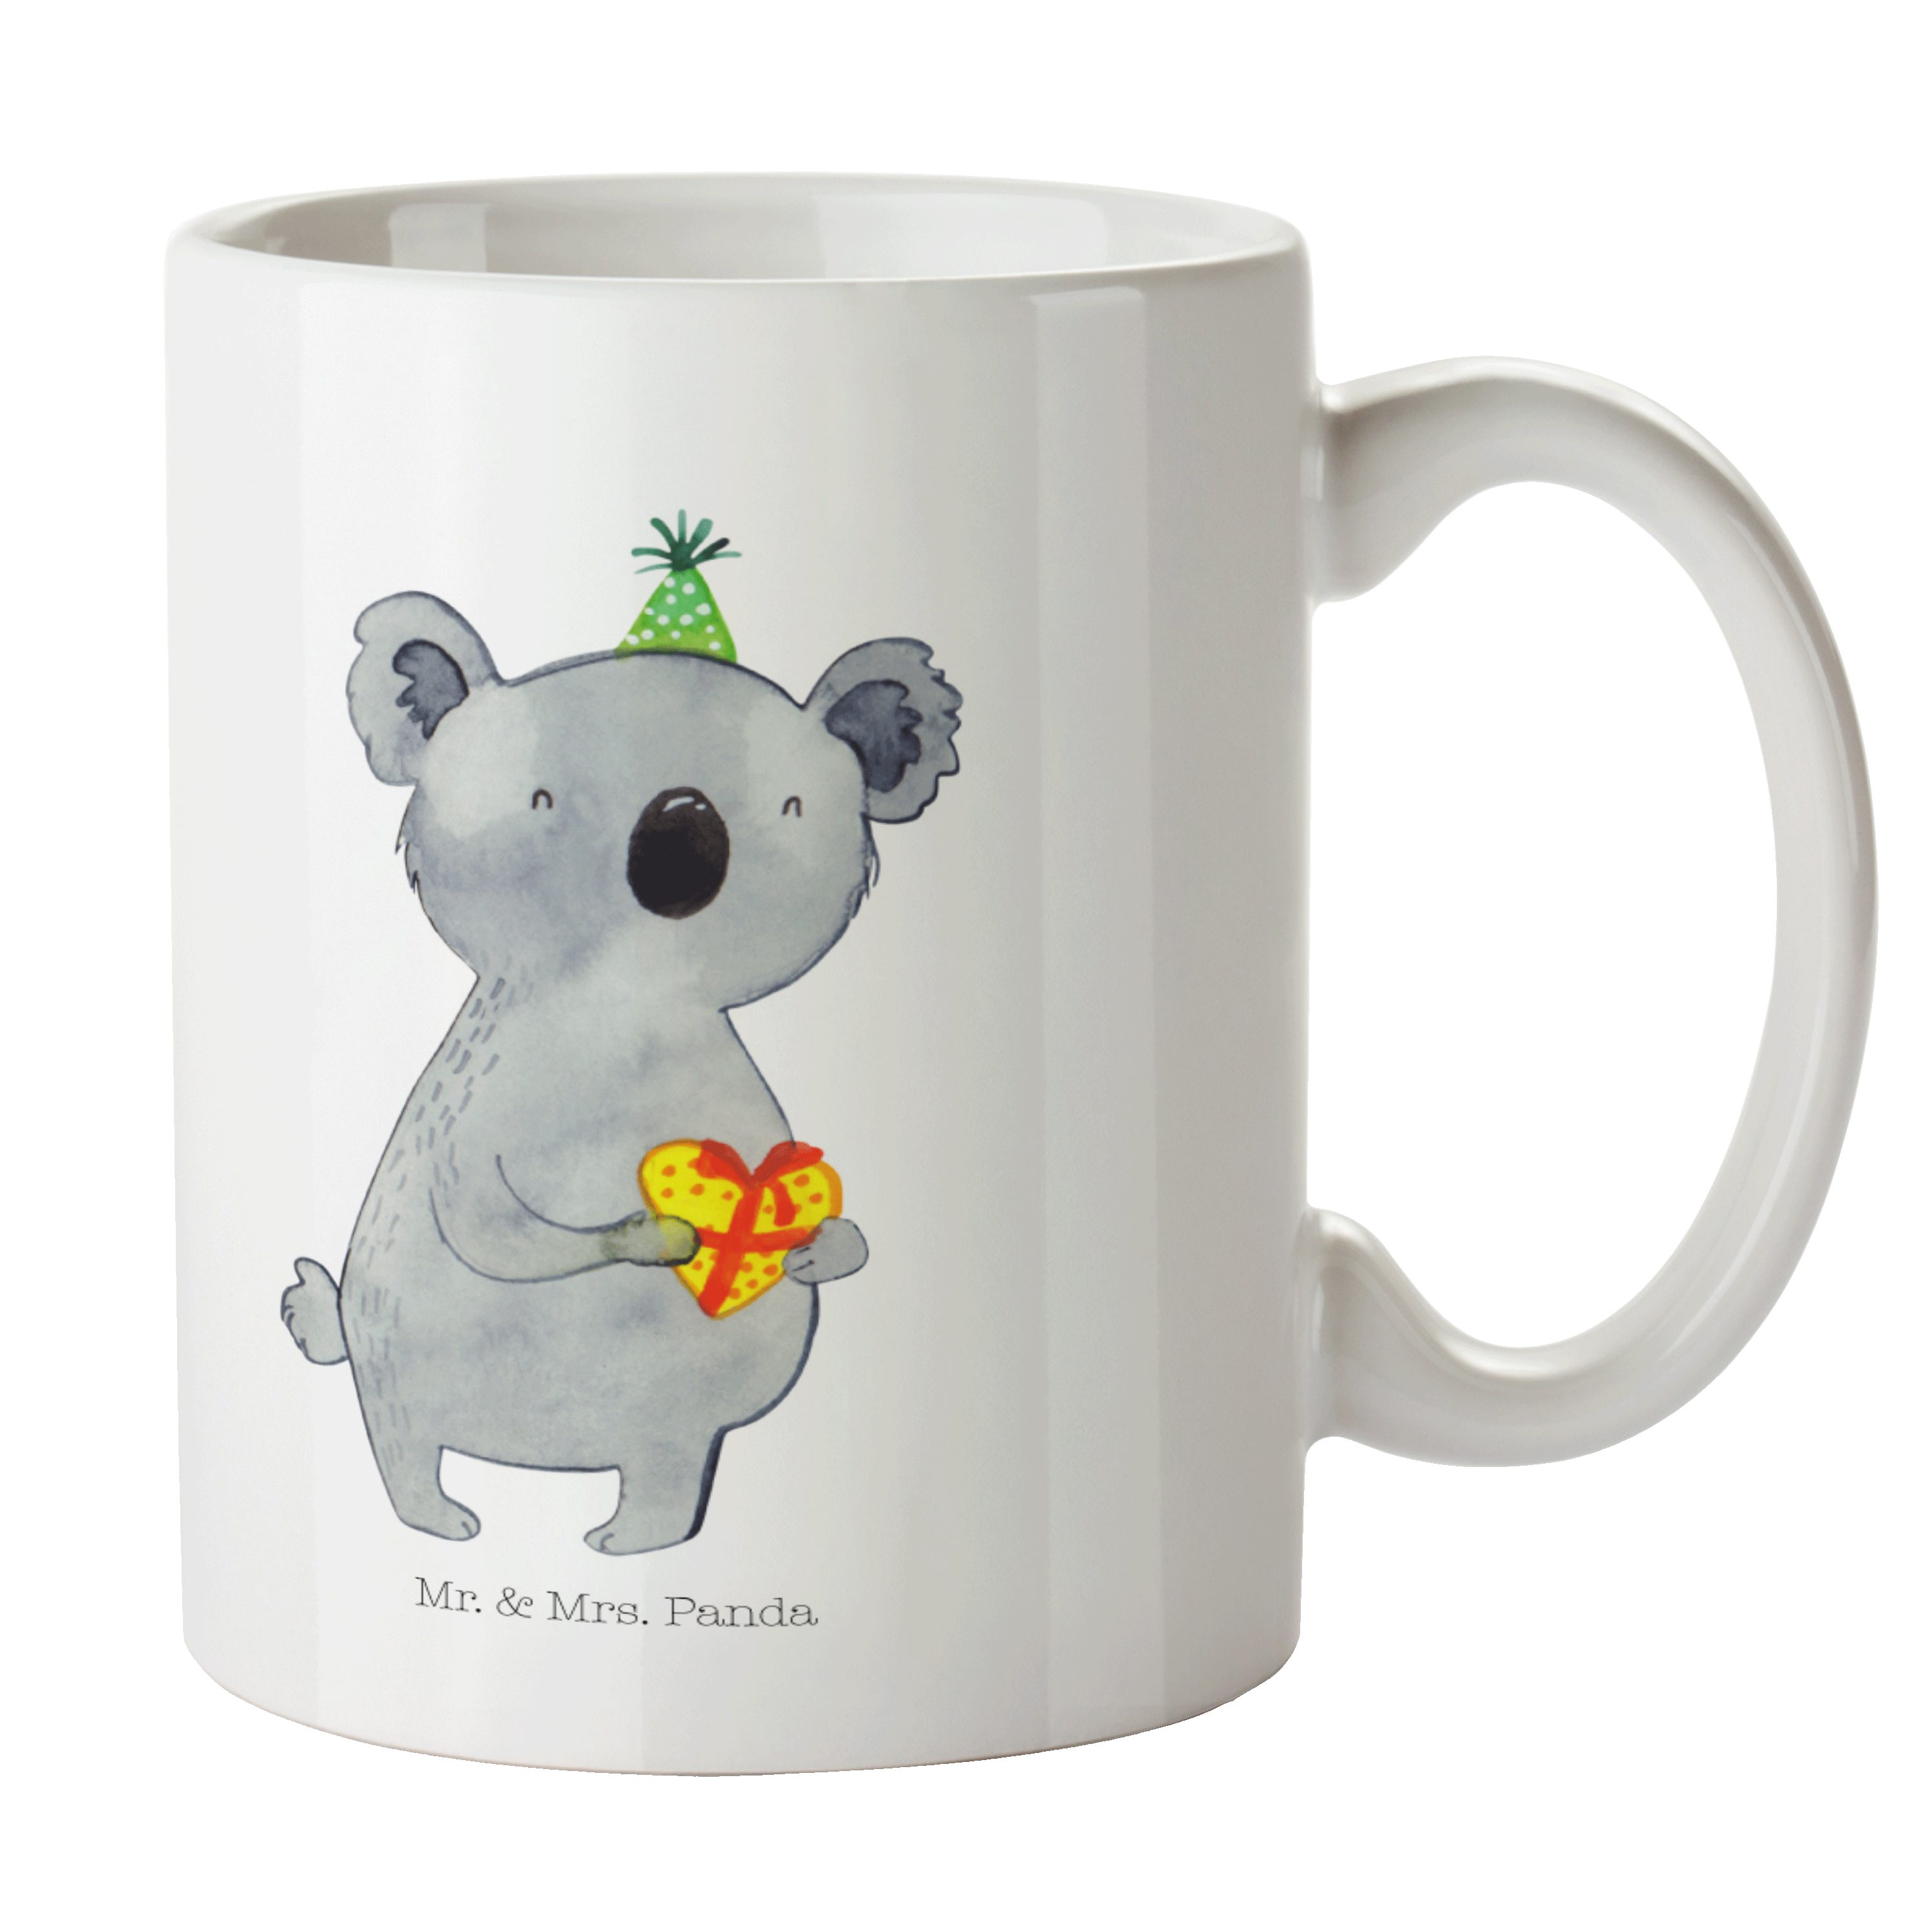 Tasse Geschenk Koalabär, Party, Koala - Mr. Keramik Tasse Mrs. Sprüche, Panda Kaffeetasse, & - Weiß